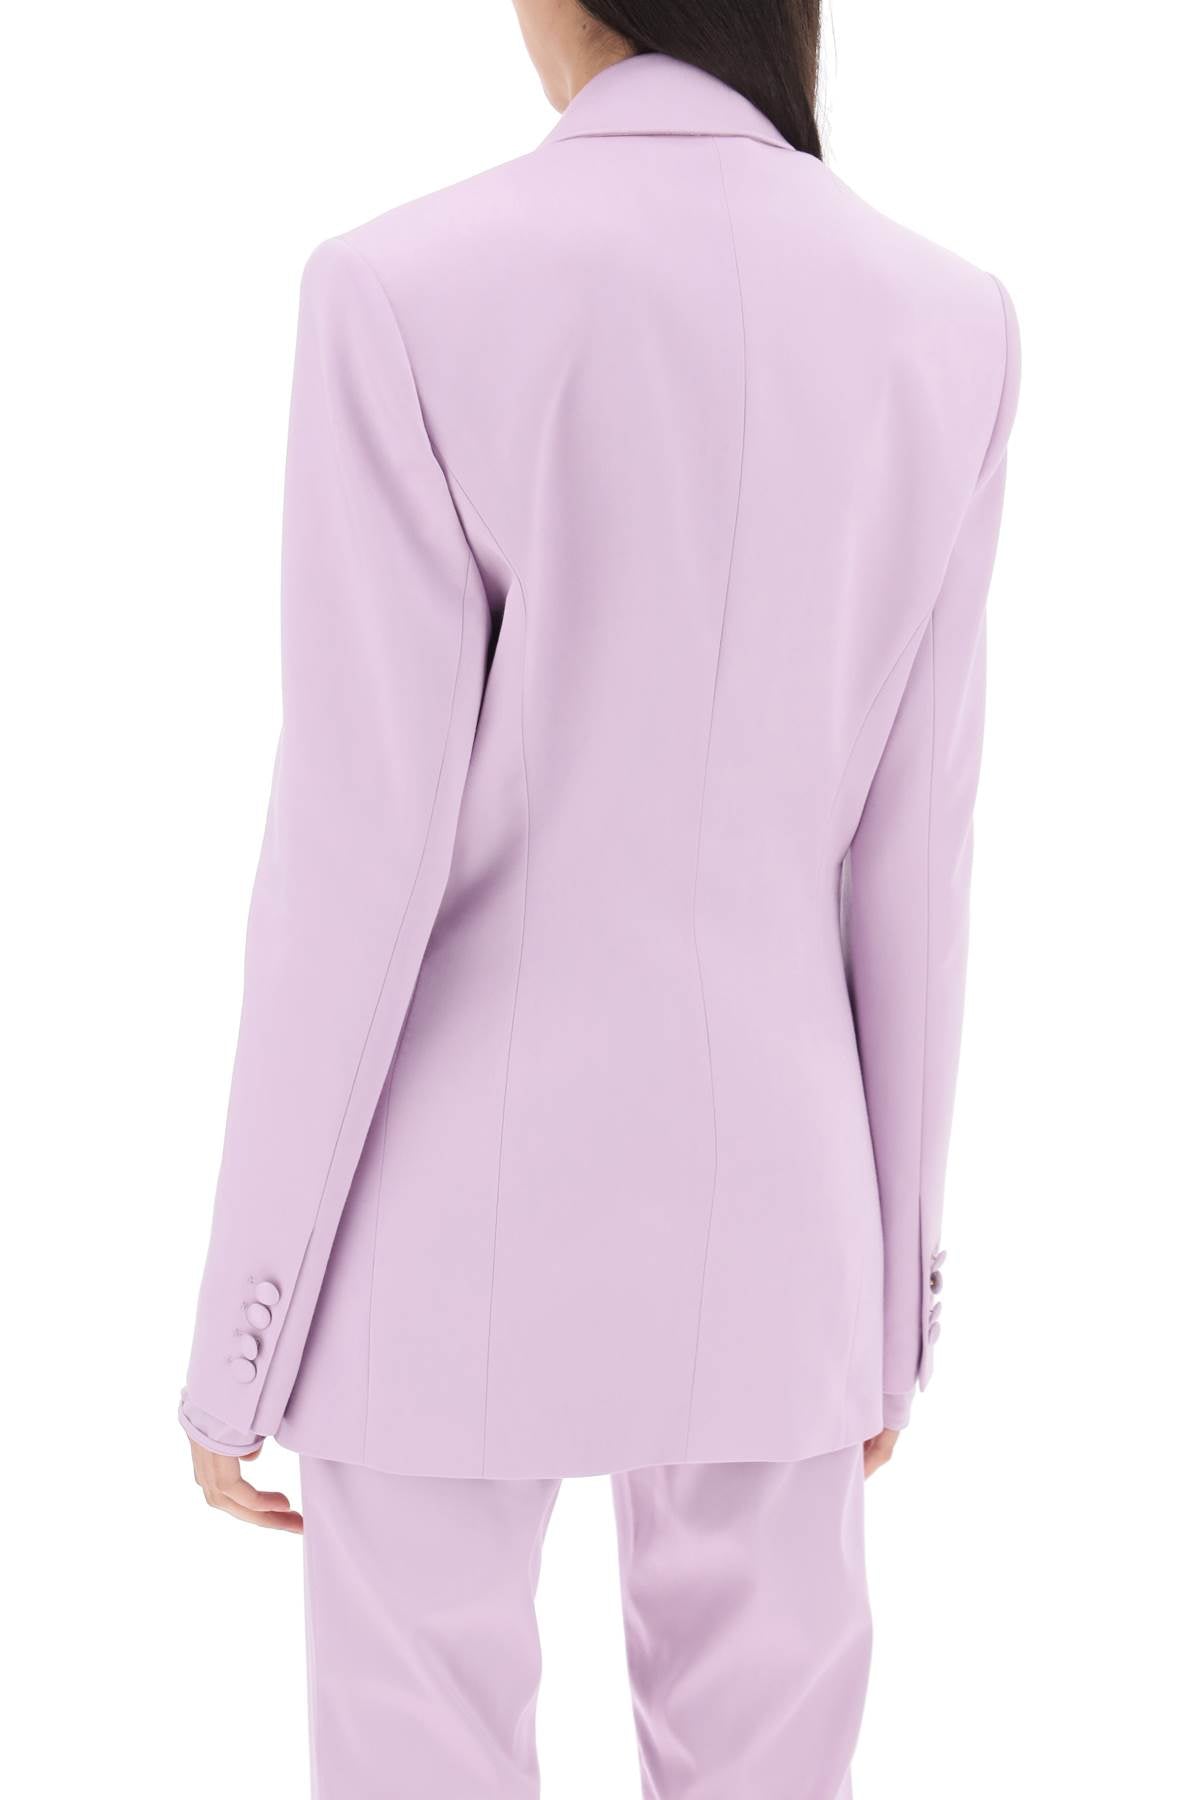 MAGDA BUTRYM Elegant Purple Single-Breasted Blazer for Women's SS23 Wardrobe